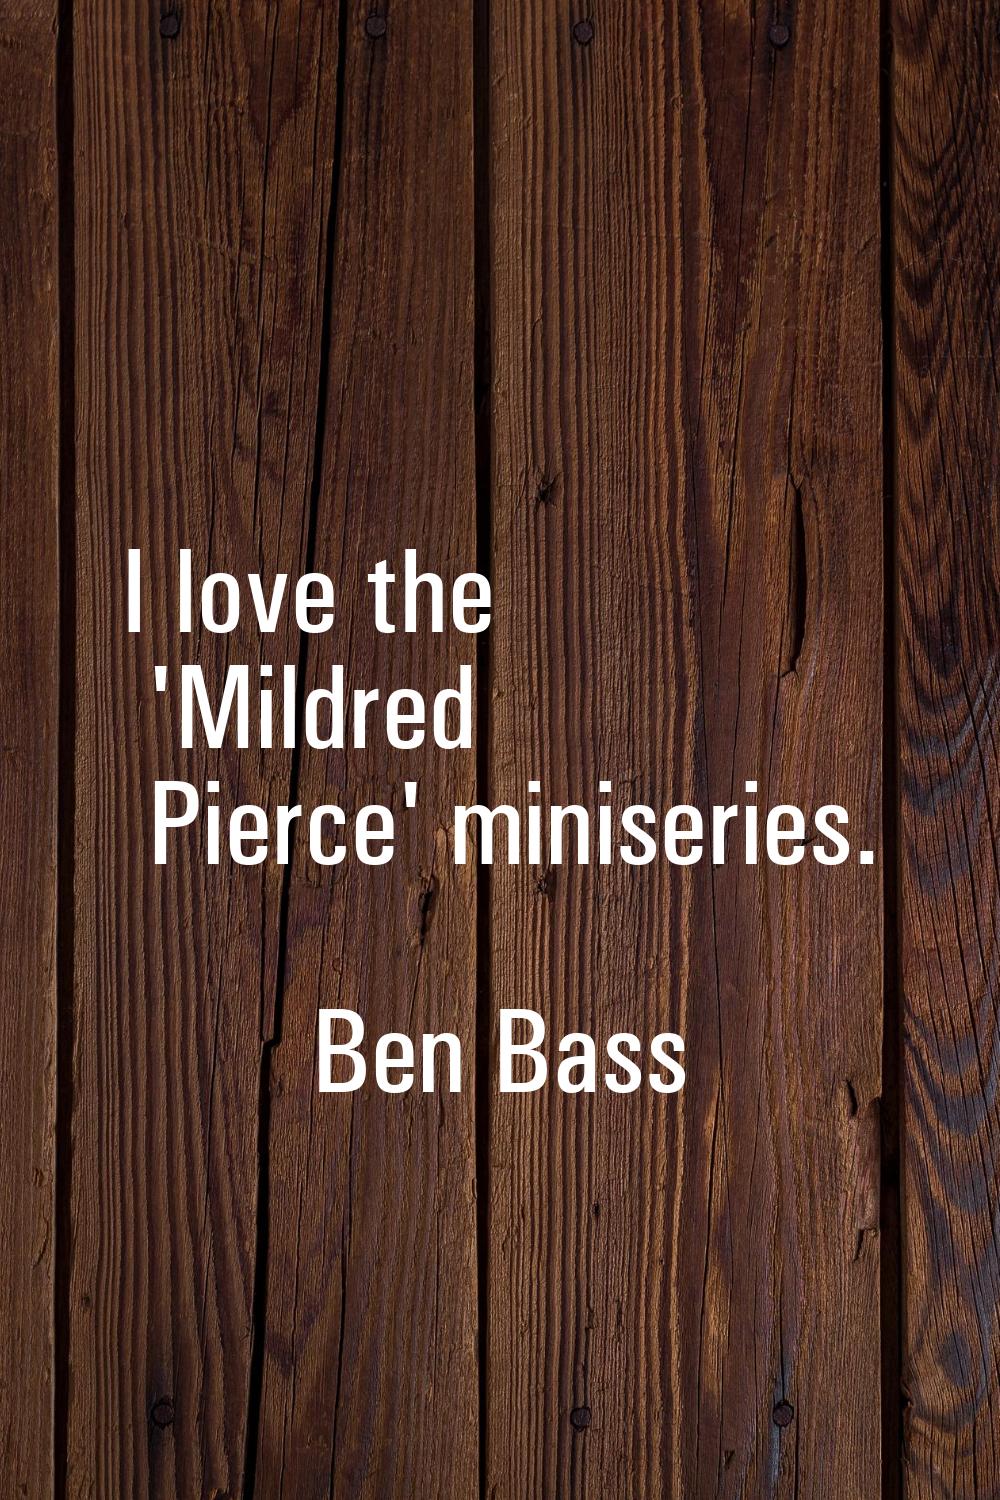 I love the 'Mildred Pierce' miniseries.